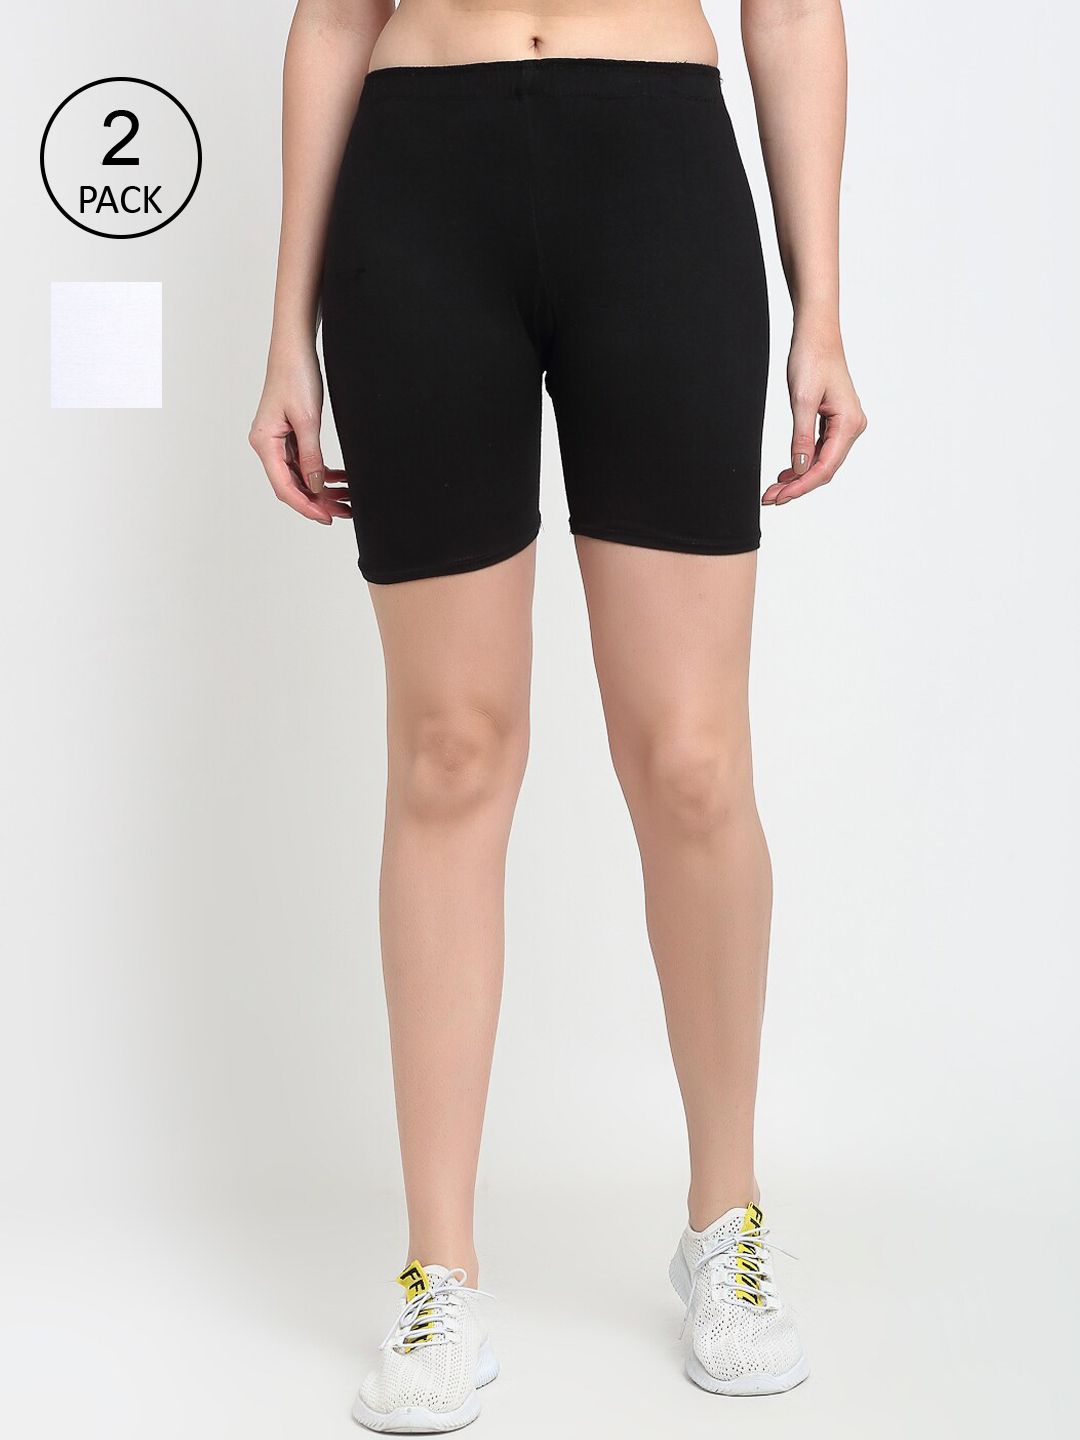 GRACIT Women Pack of 2 Black & White Biker Shorts Price in India